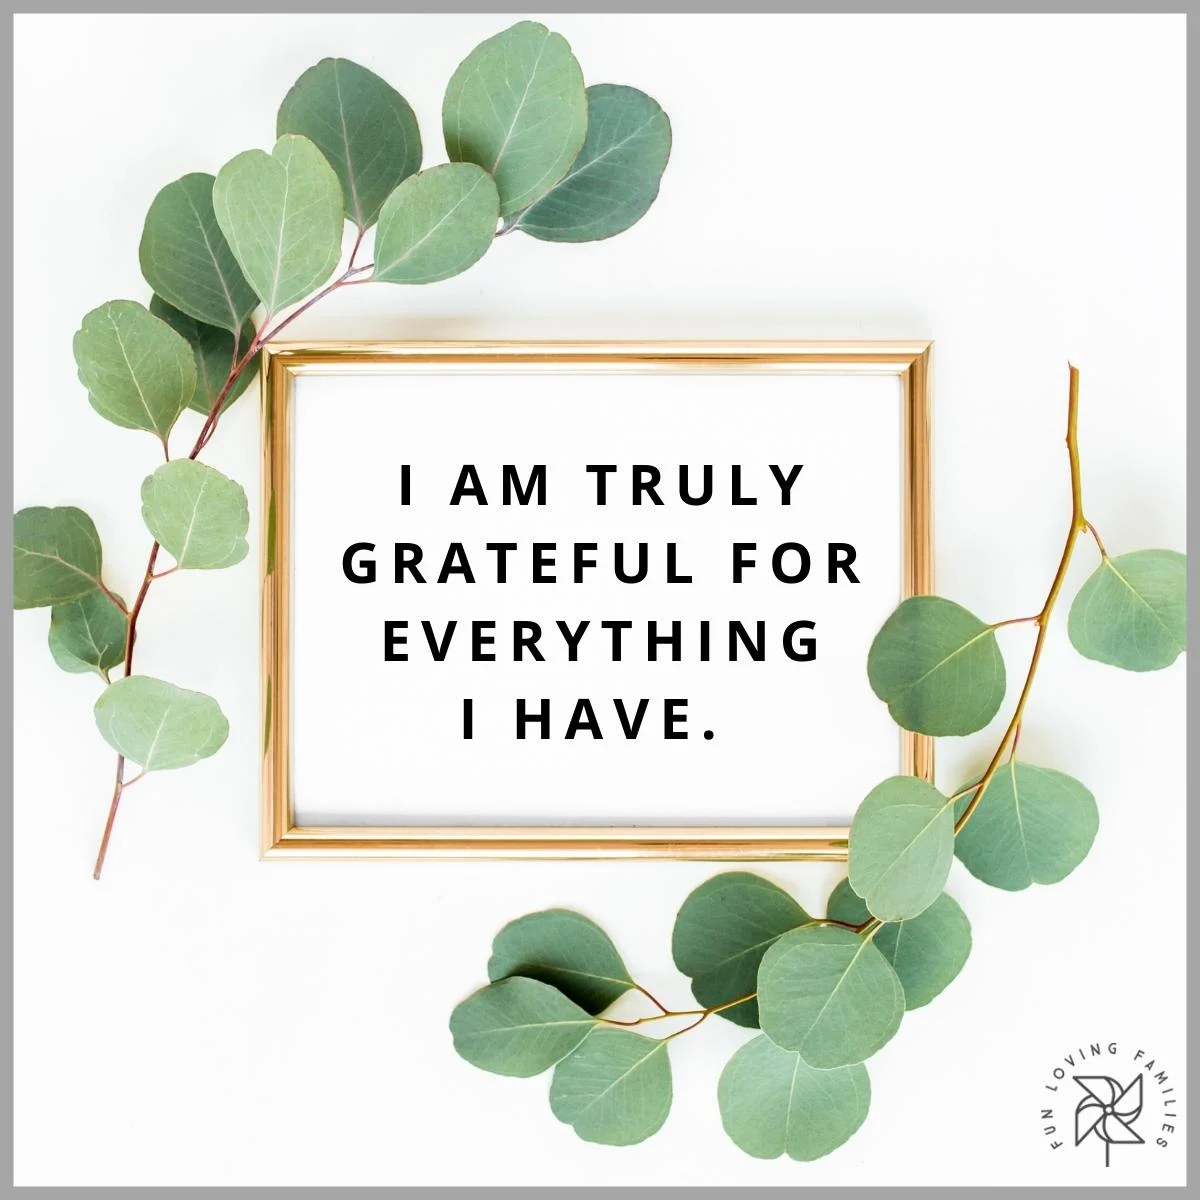 I am truly grateful for everything I have affirmation